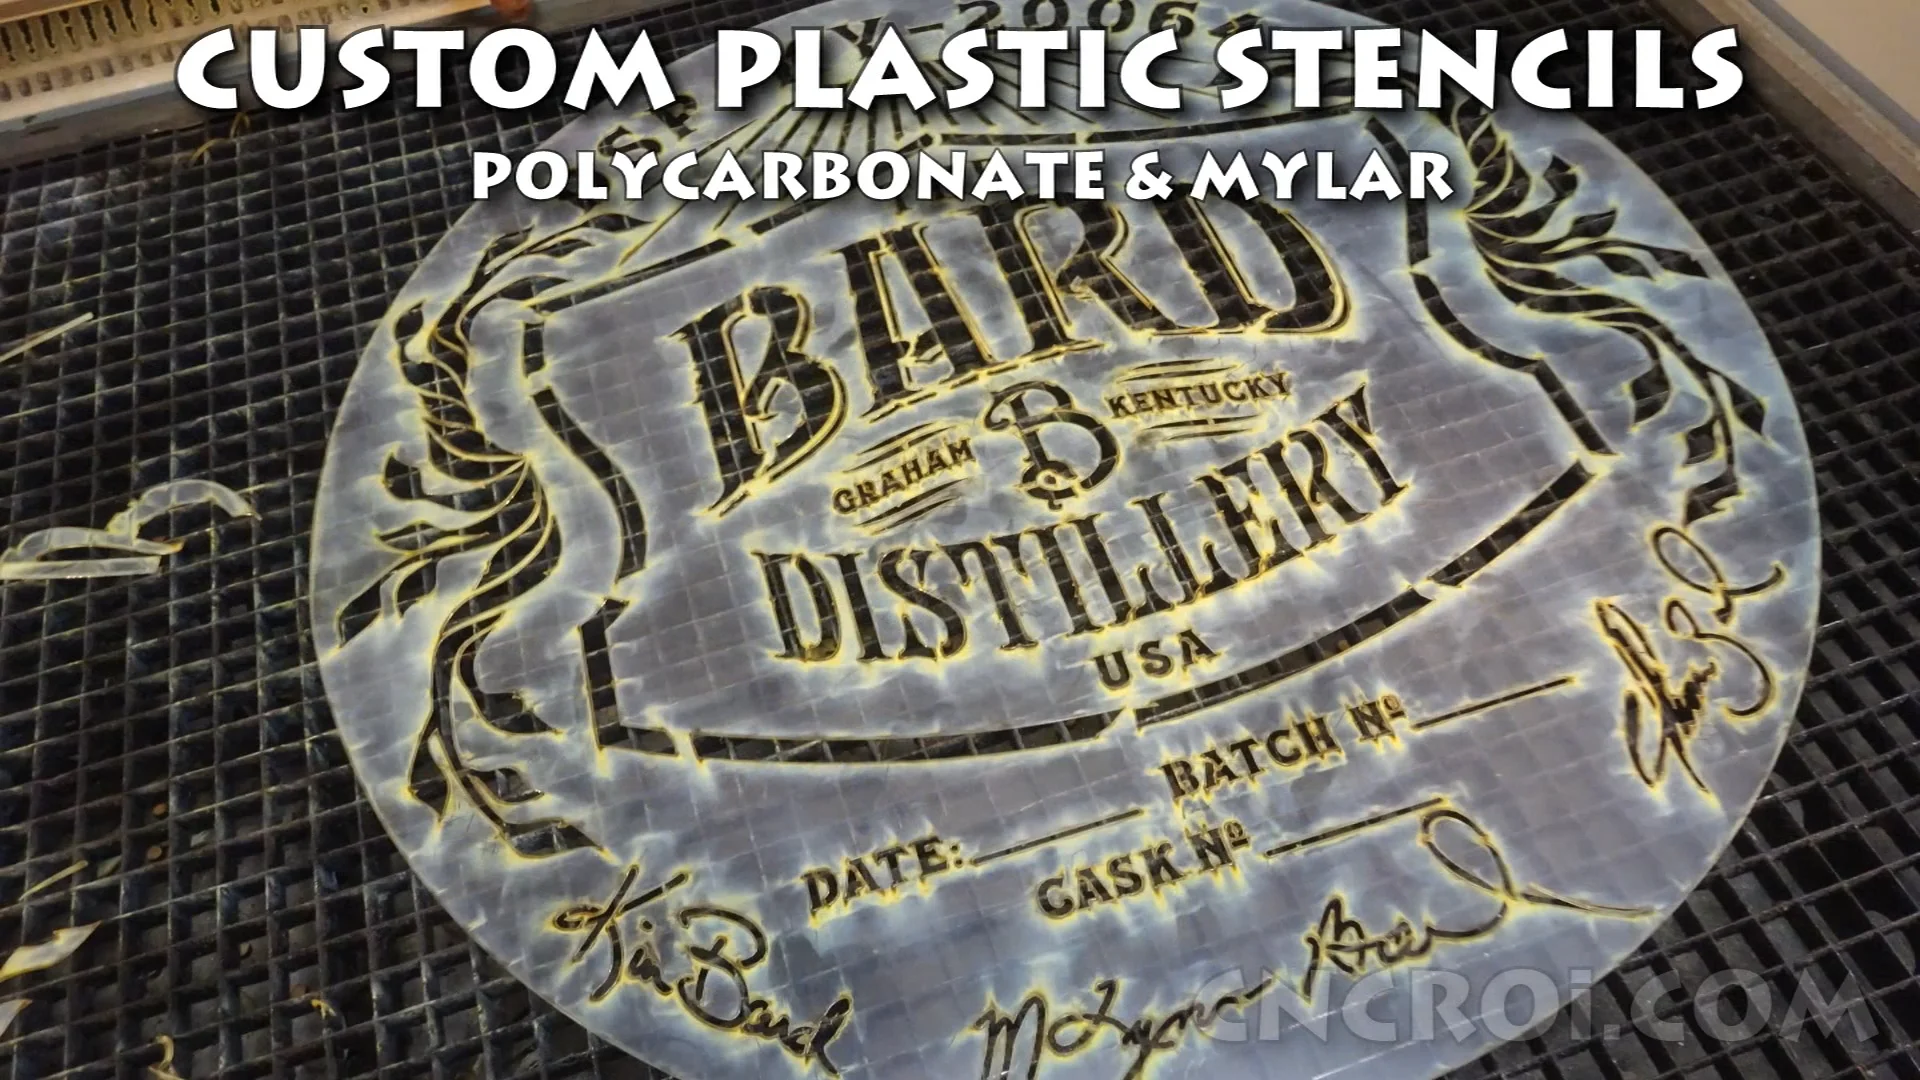 Custom Plastic Stencils: Polycarbonate & Mylar on Vimeo